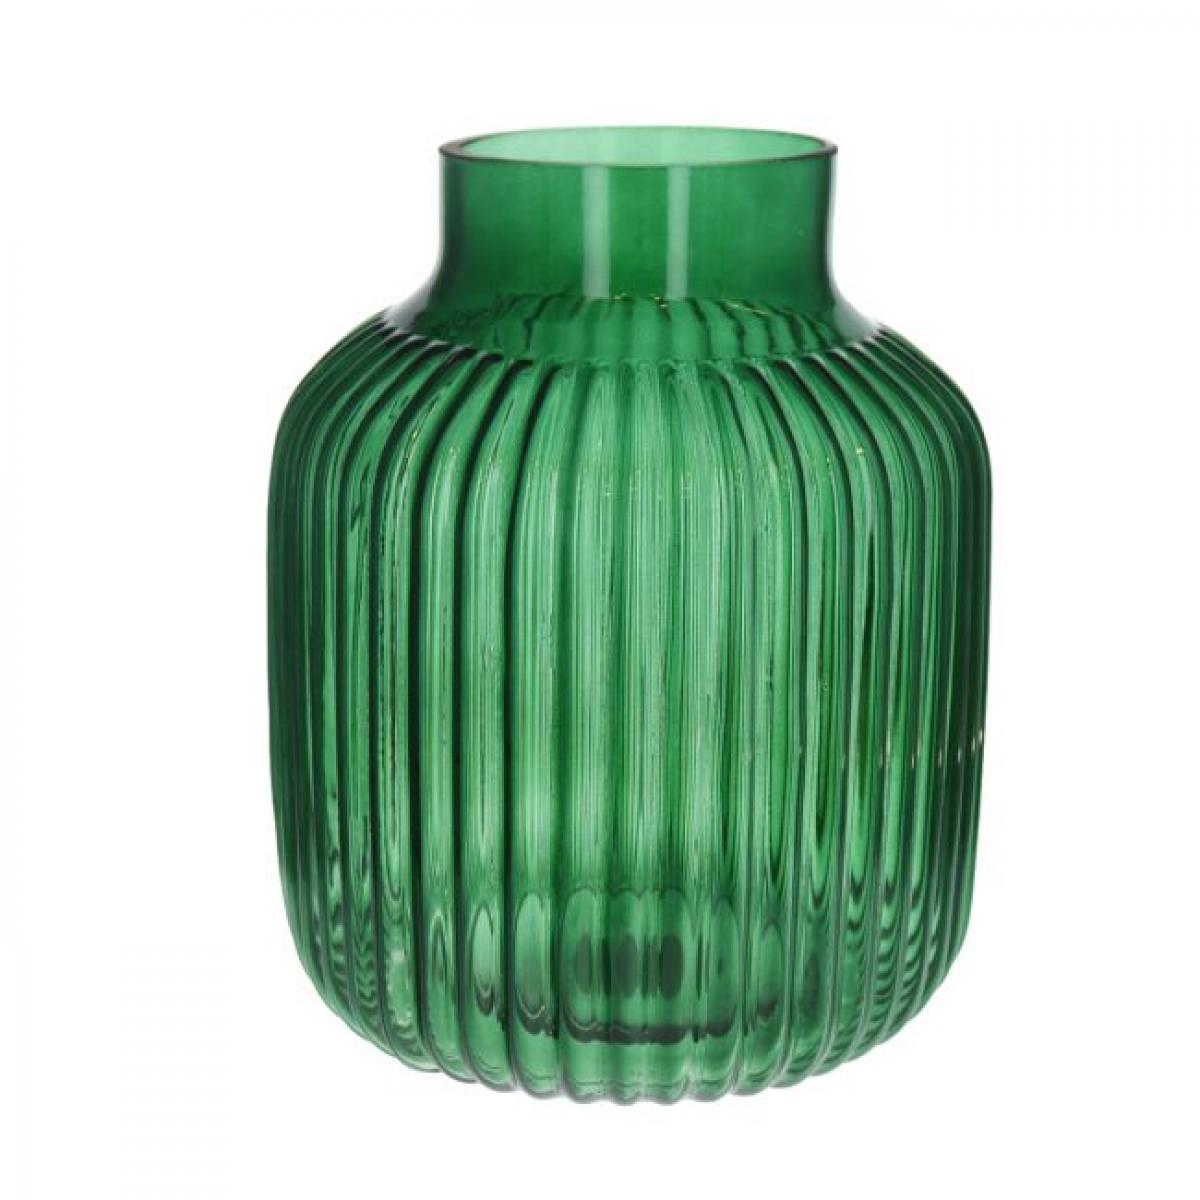 Grand vase strié vert